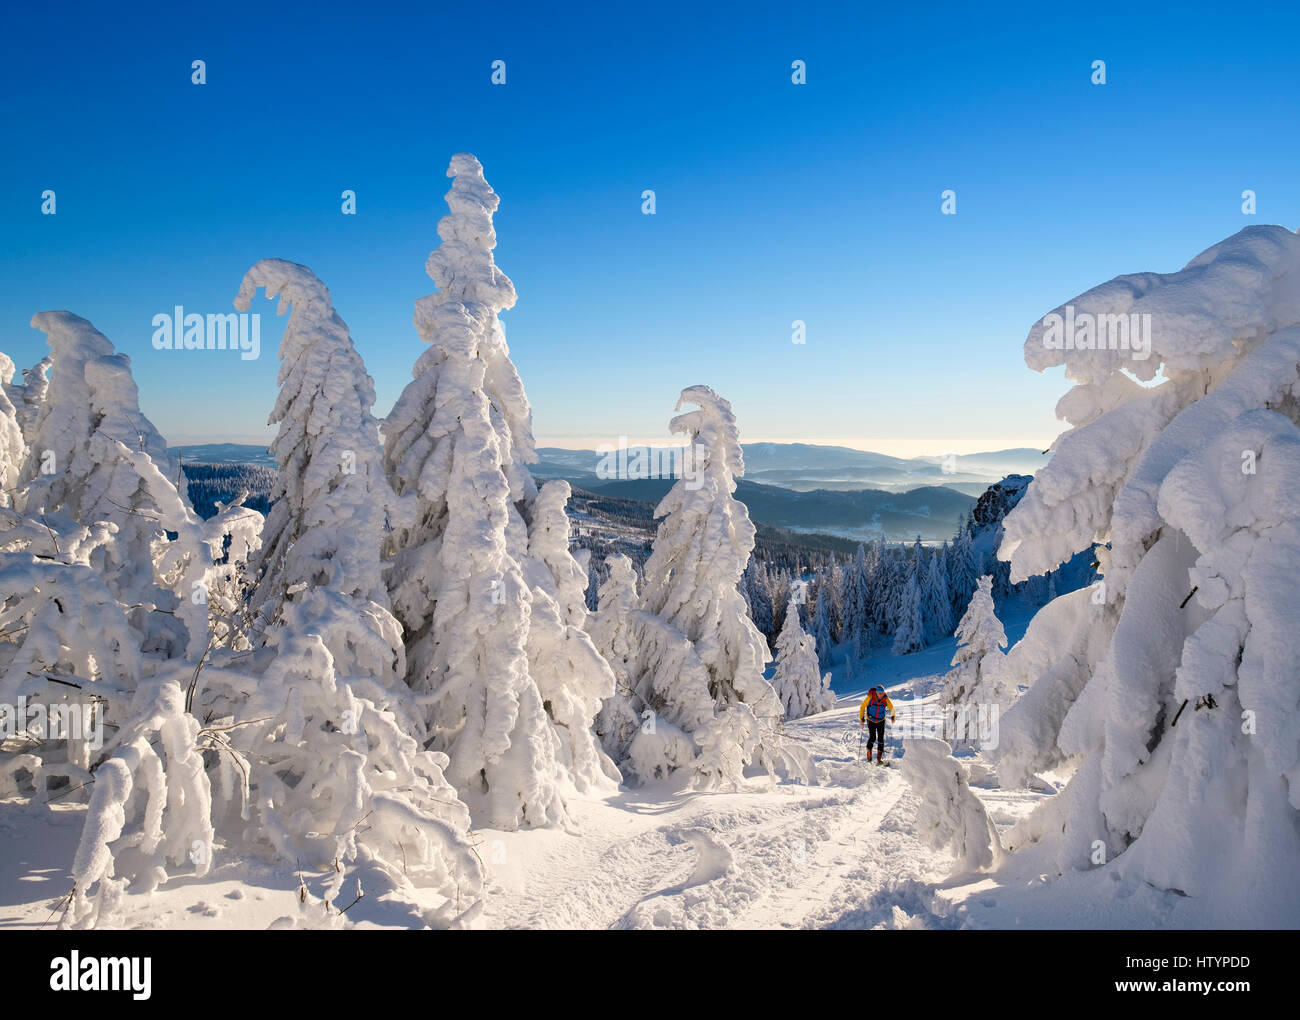 Ski tourers on Arbermandl, snowy spruces, Arber, Natural Preserve Bavarian Forest, Lower Bavaria, Bavaria, Germany Stock Photo